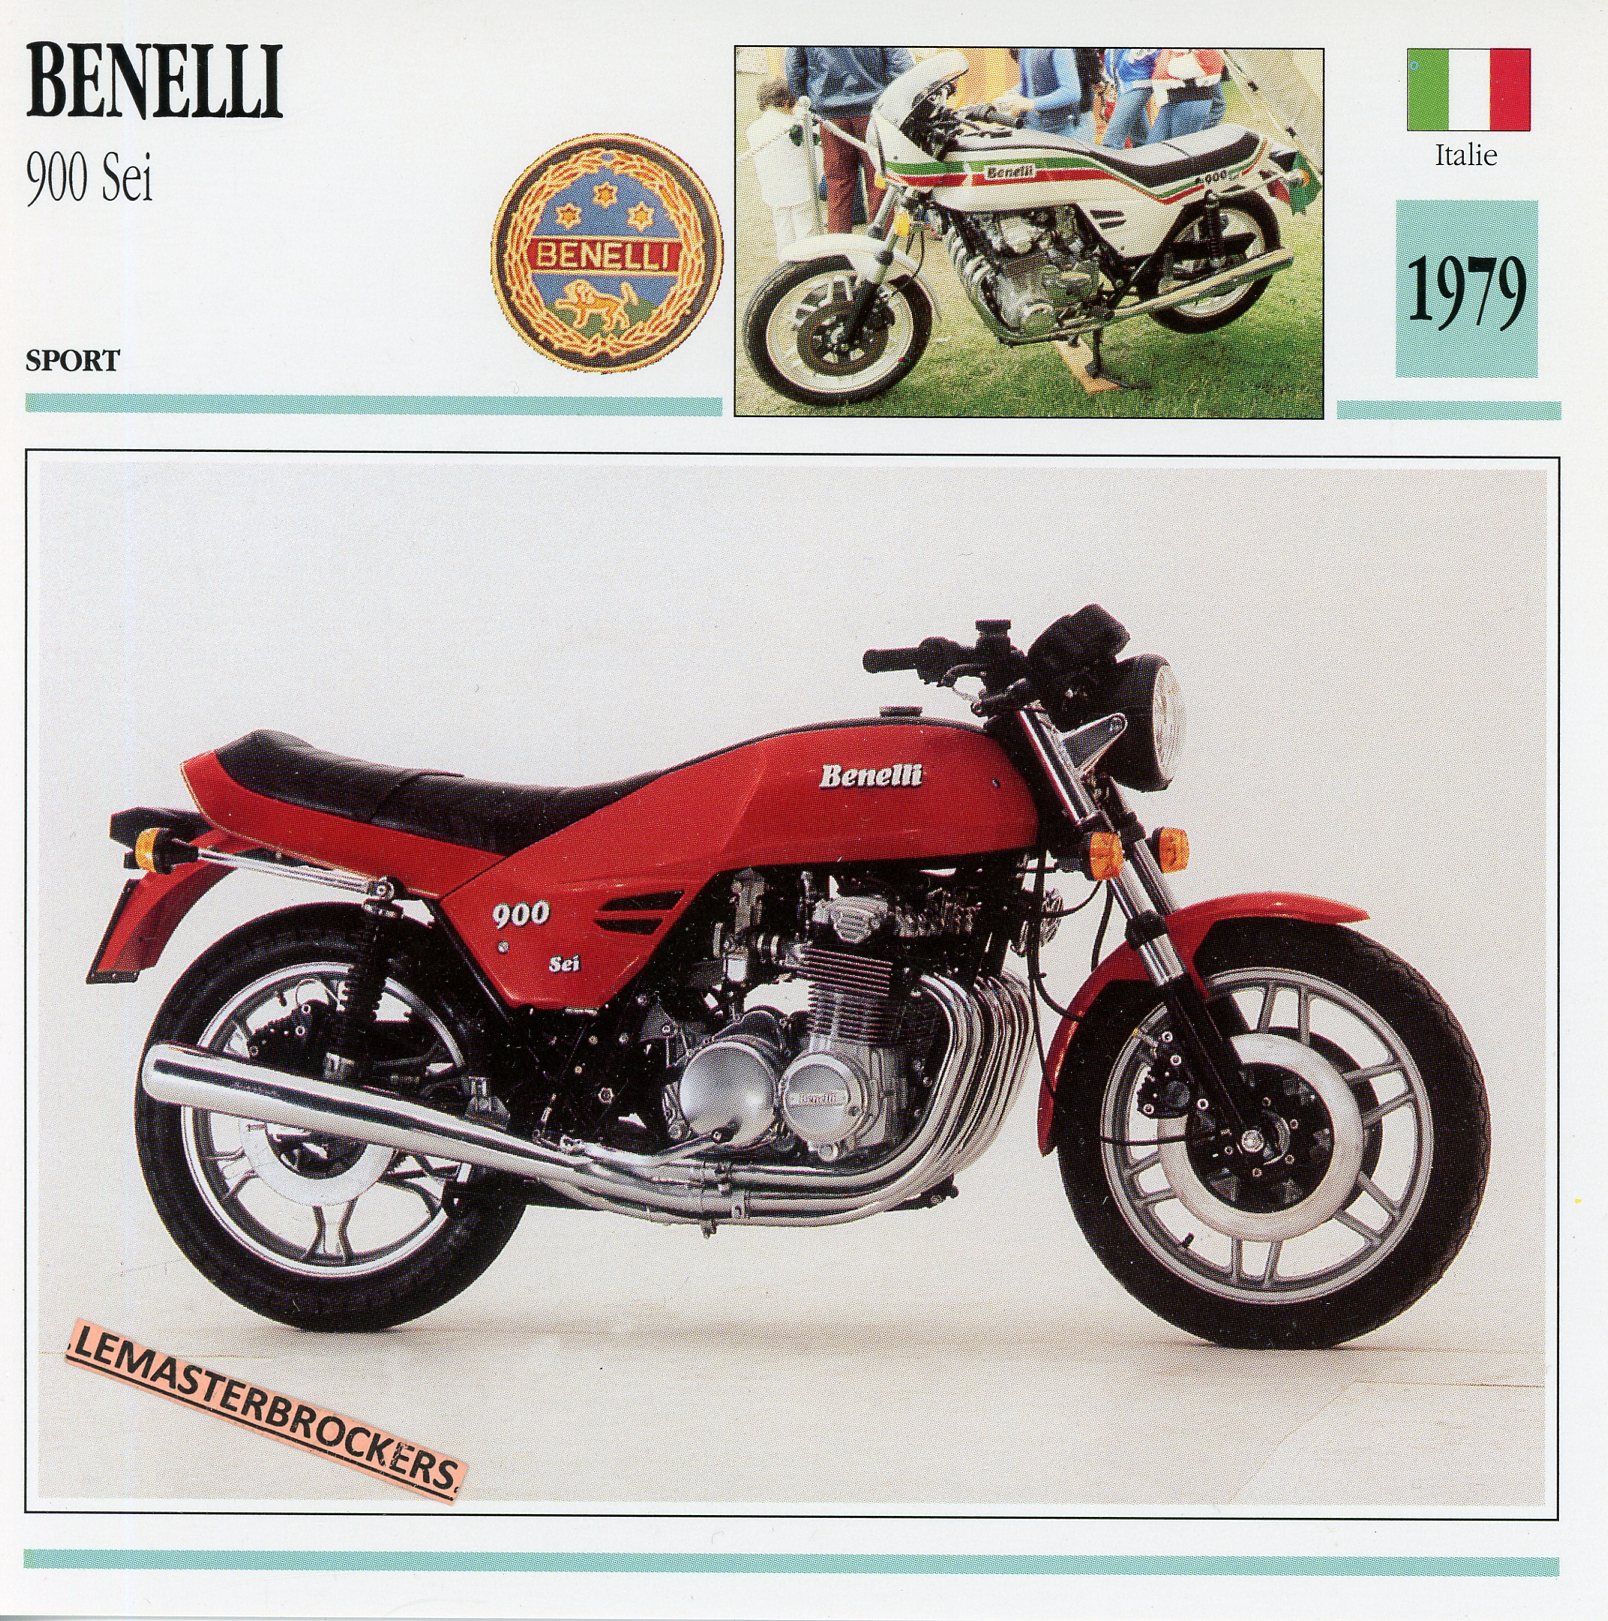 BENELLI-900-SEI-900SEI-1976-LEMASTERBROCKERS-FICHE-MOTO-ATLAS-CARD